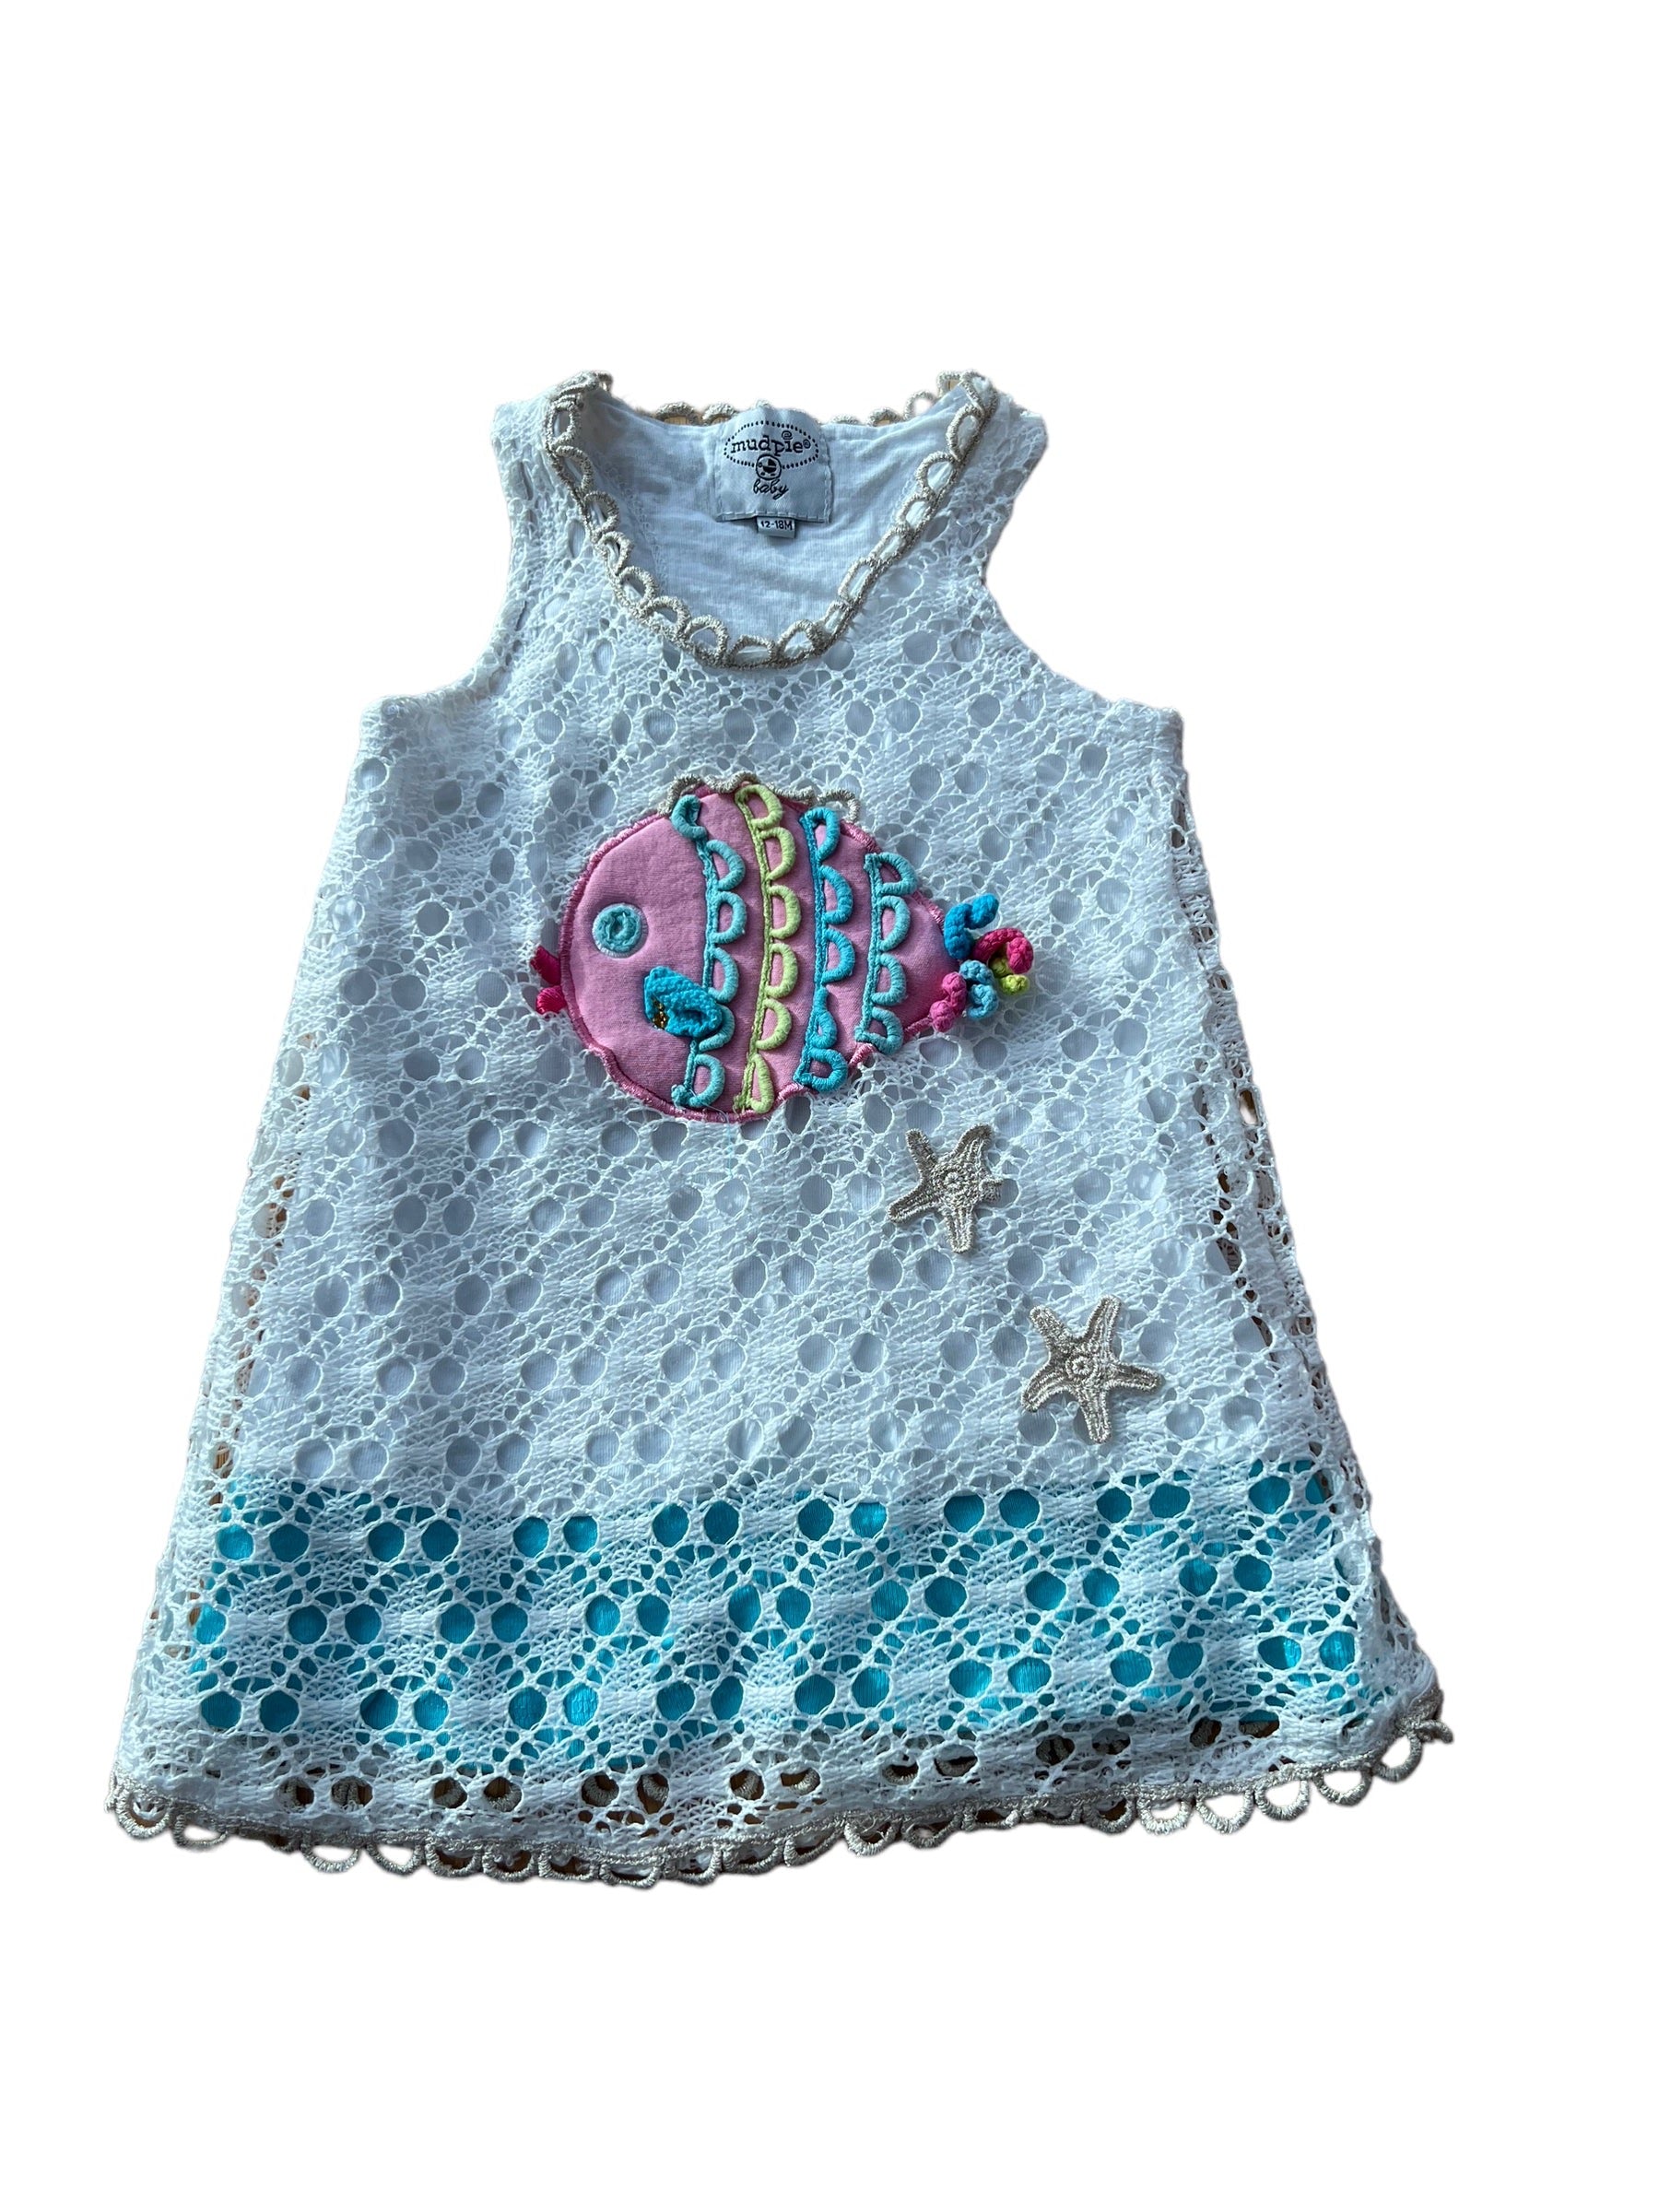 Mud Pie Baby Dress